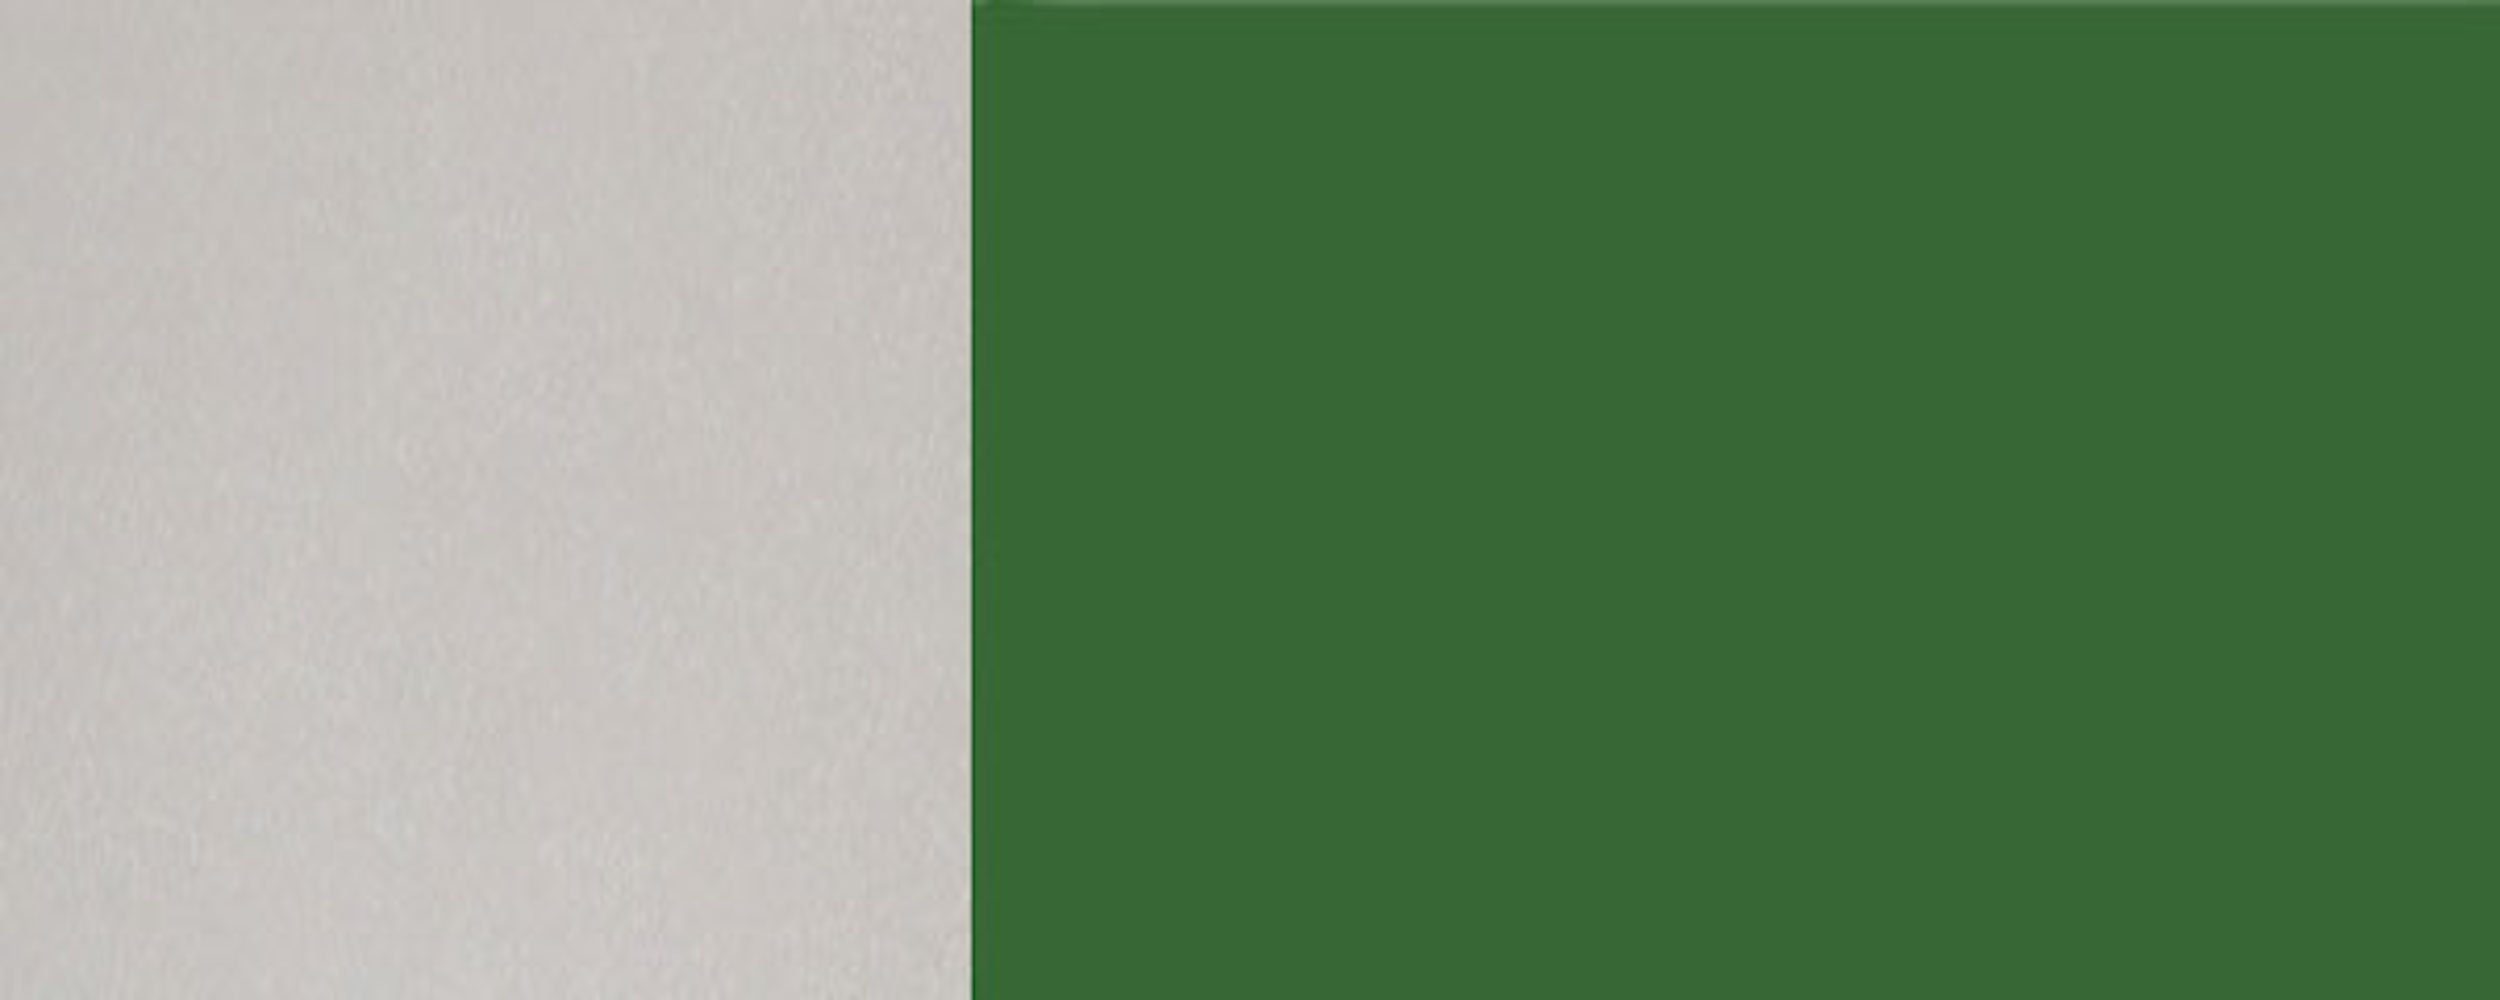 grifflos und 1-türig Front-, Florence (Florence) smaragdgrün RAL Ausführung Feldmann-Wohnen 30cm 6001 Klapphängeschrank Hochglanz Korpusfarbe wählbar